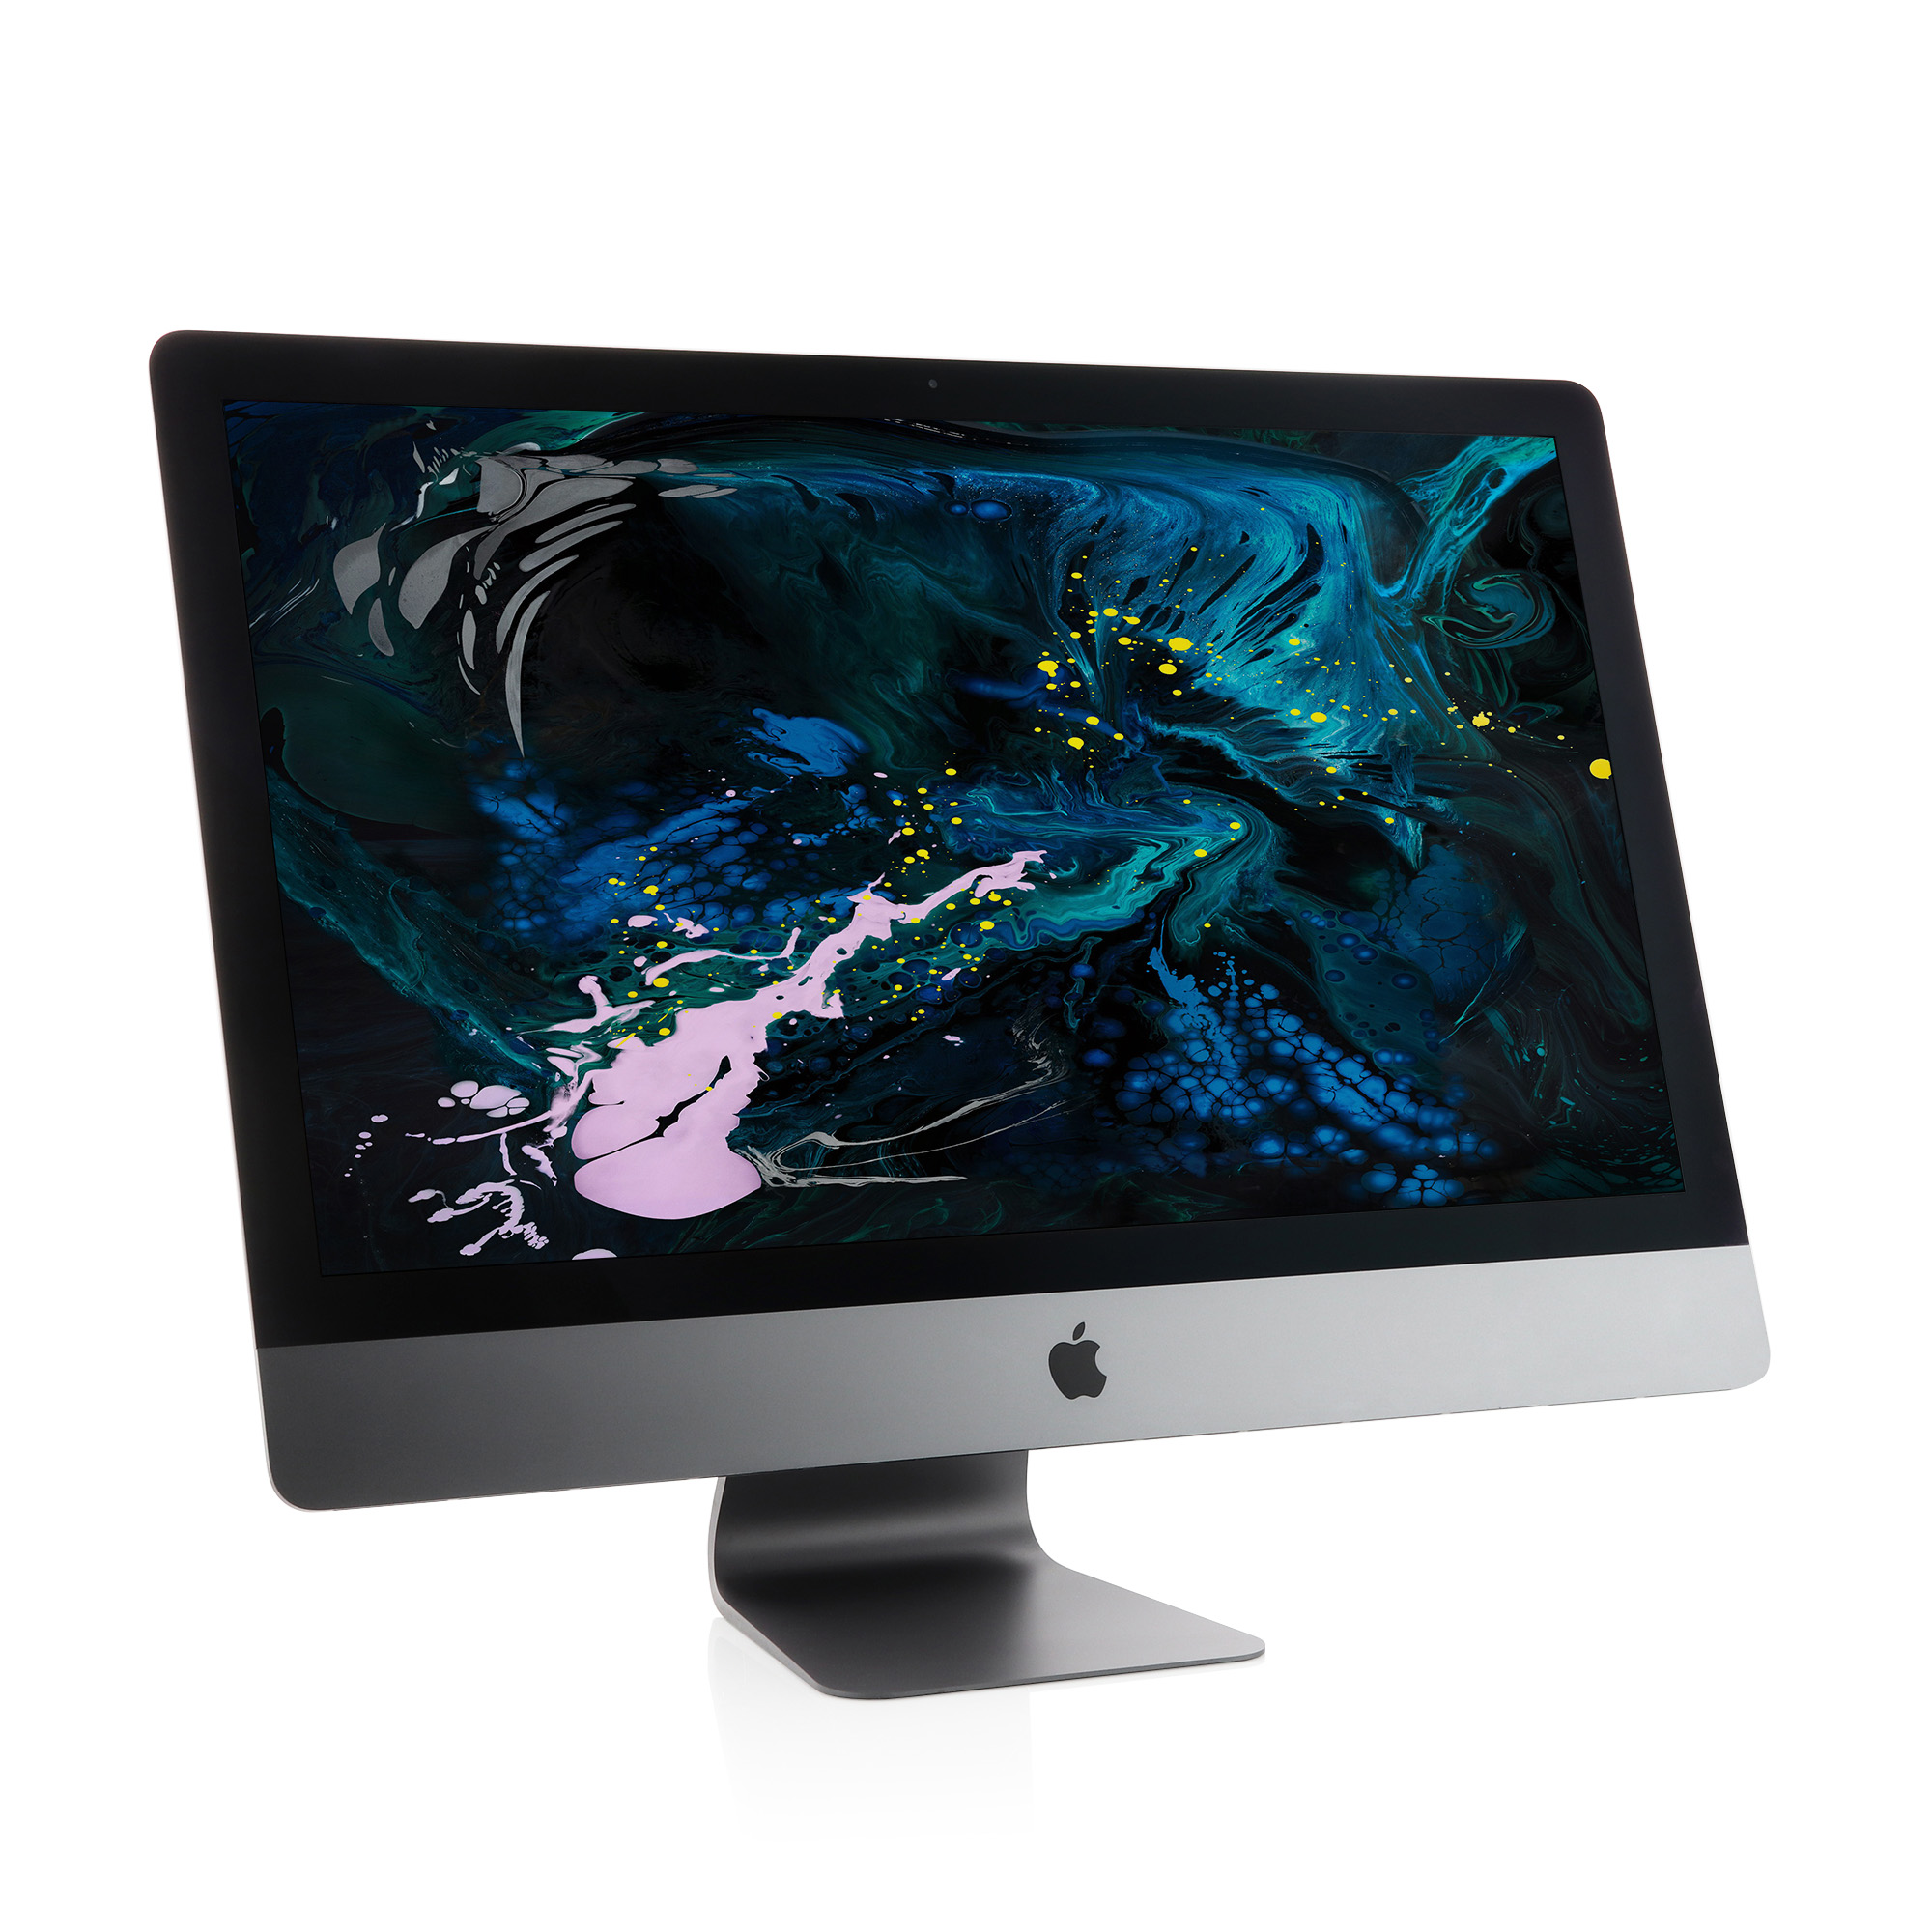 2017 Apple iMac Pro 27-inch Intel Xeon 3.20 GHz 8-core 32GB 1TB 8GB Memory - 